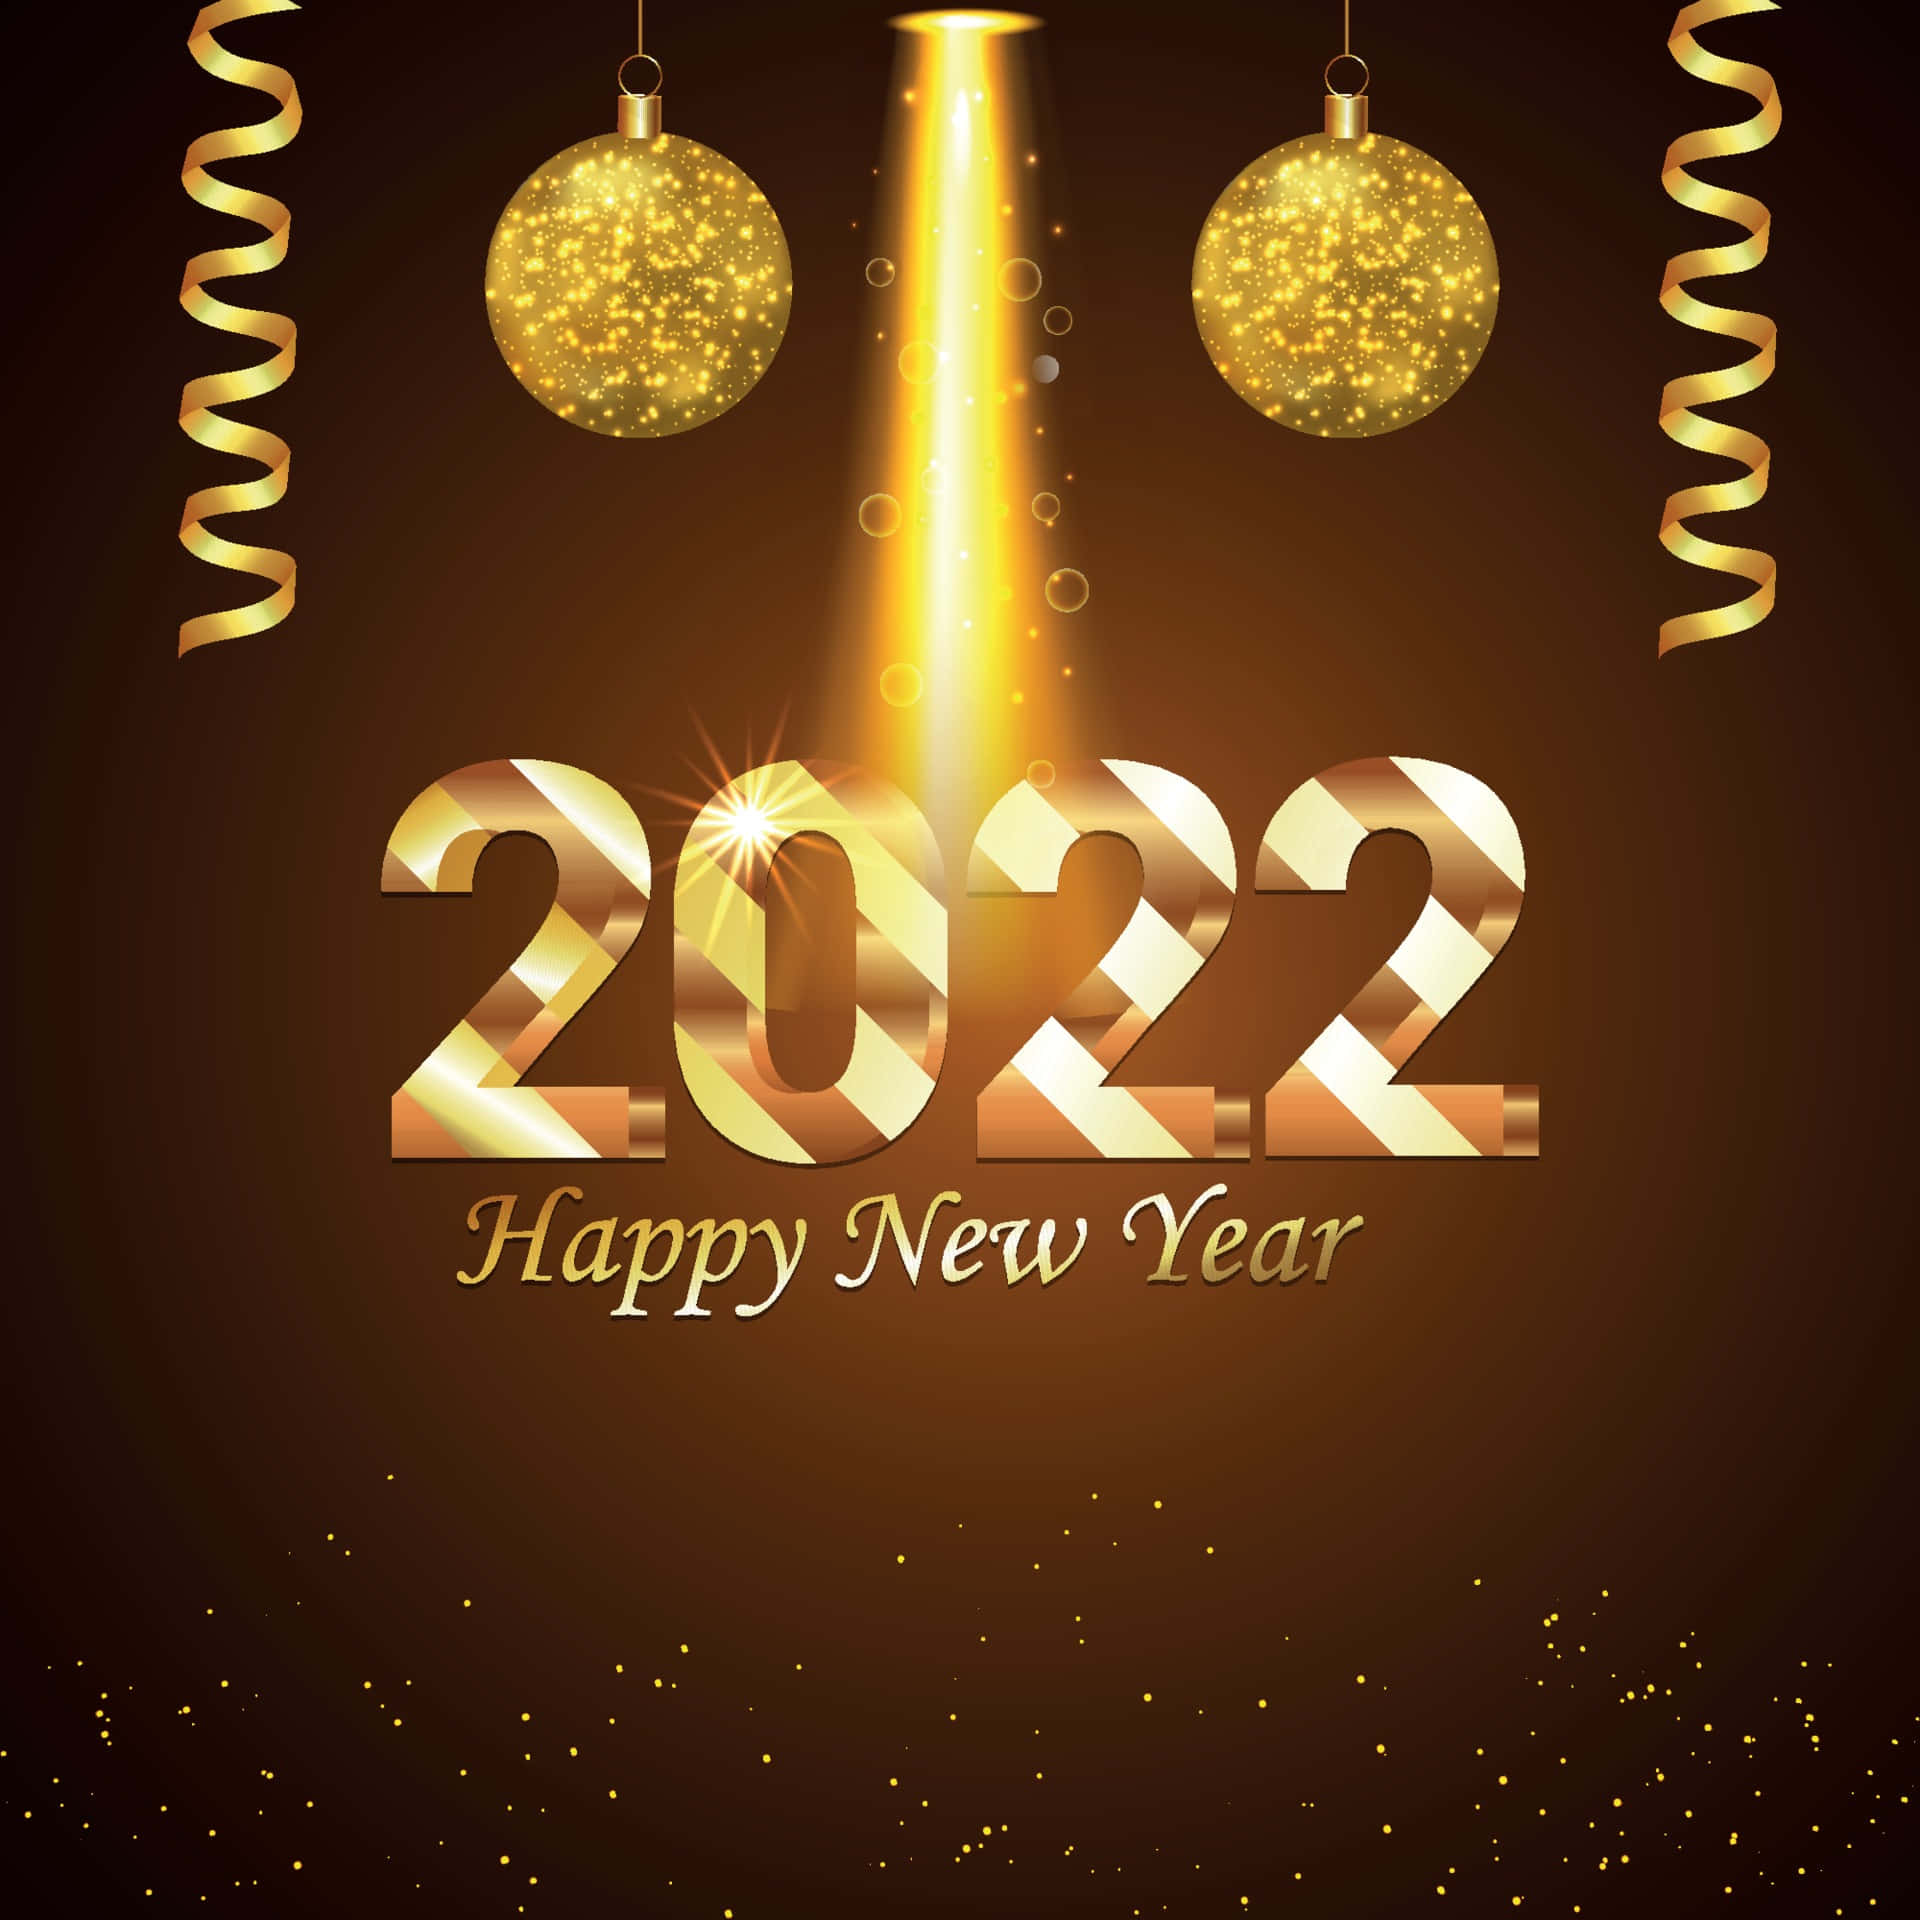 Feliceanno Nuovo 2022!